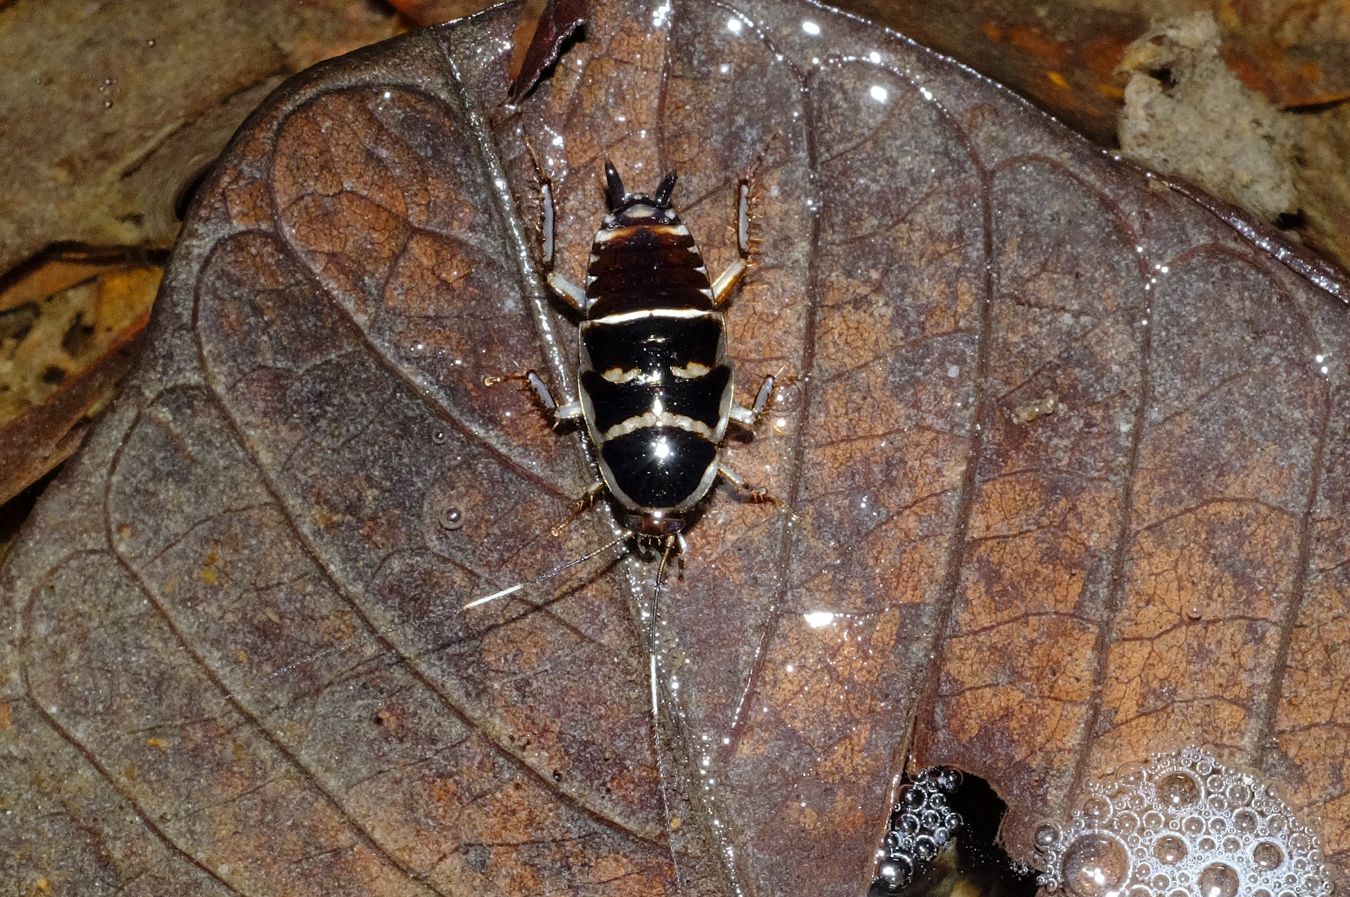 Unknown Black and White Cockroach { Maybe Sundablatta }